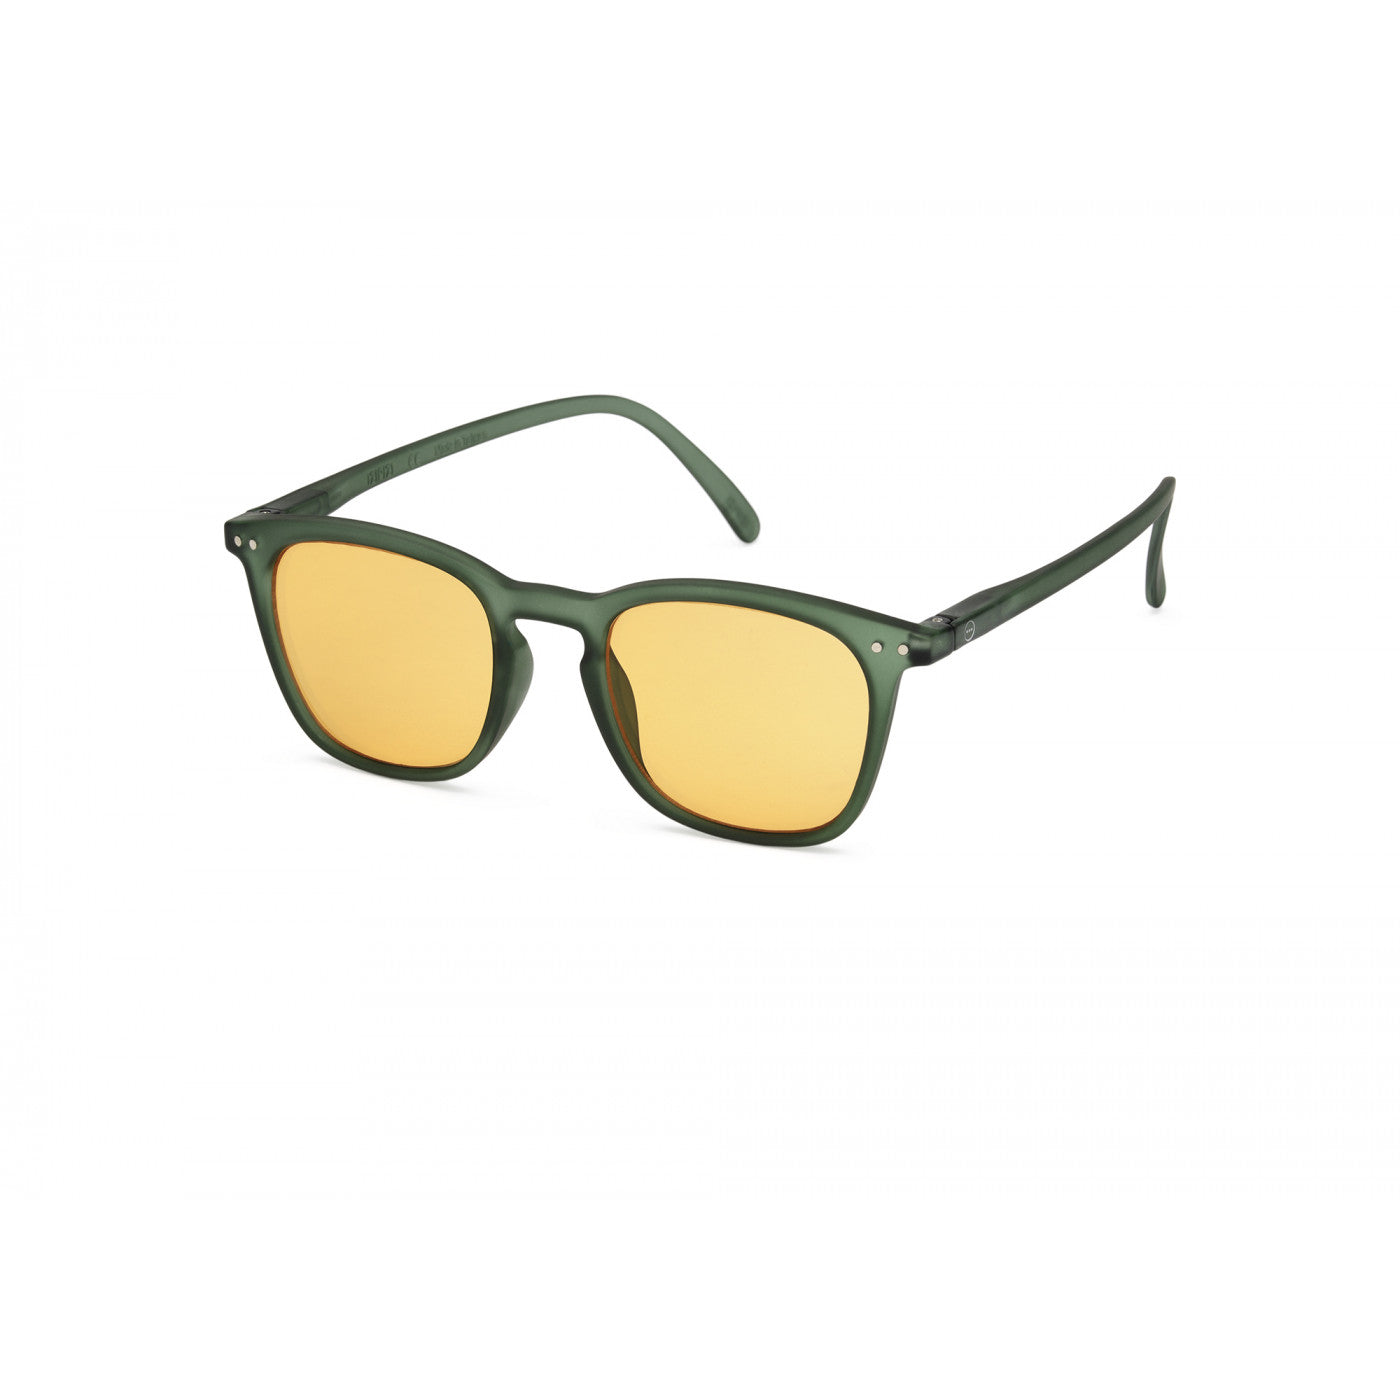 Sleeping Glasses  - #E Shape Sage Green Frame